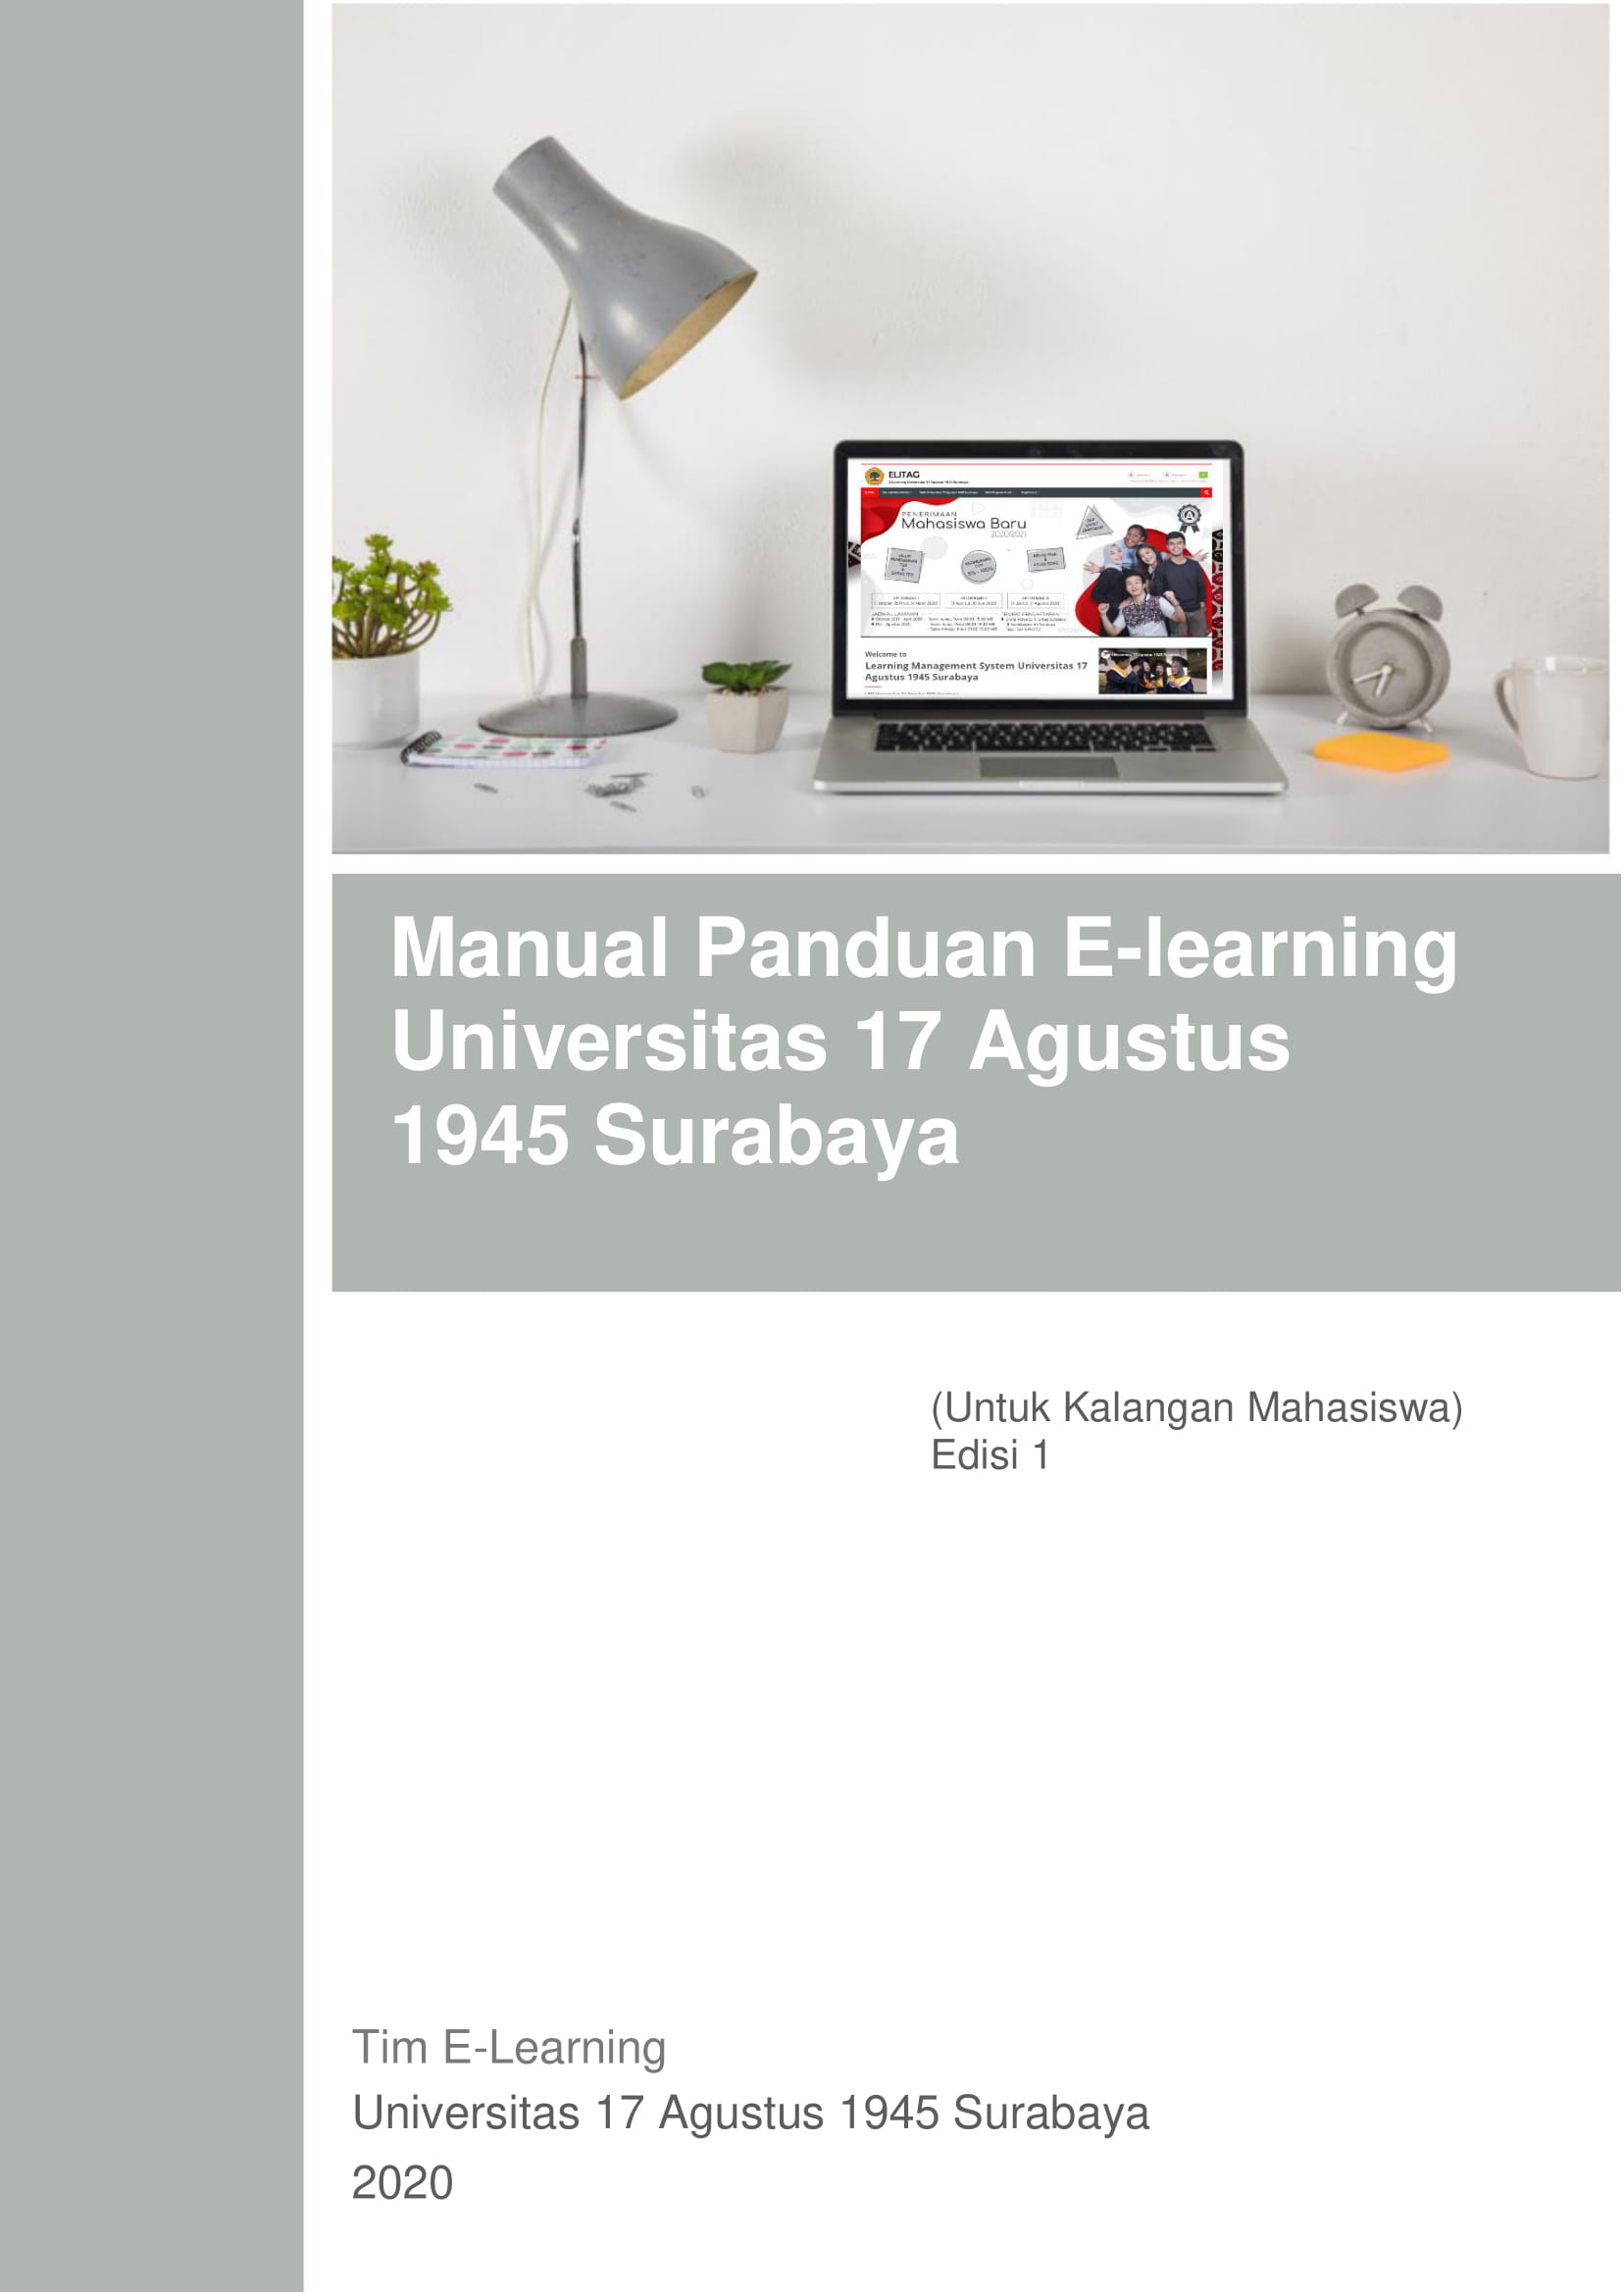 Manual Panduan E-Learning Universitas 17 Agustus 1945 Surabaya